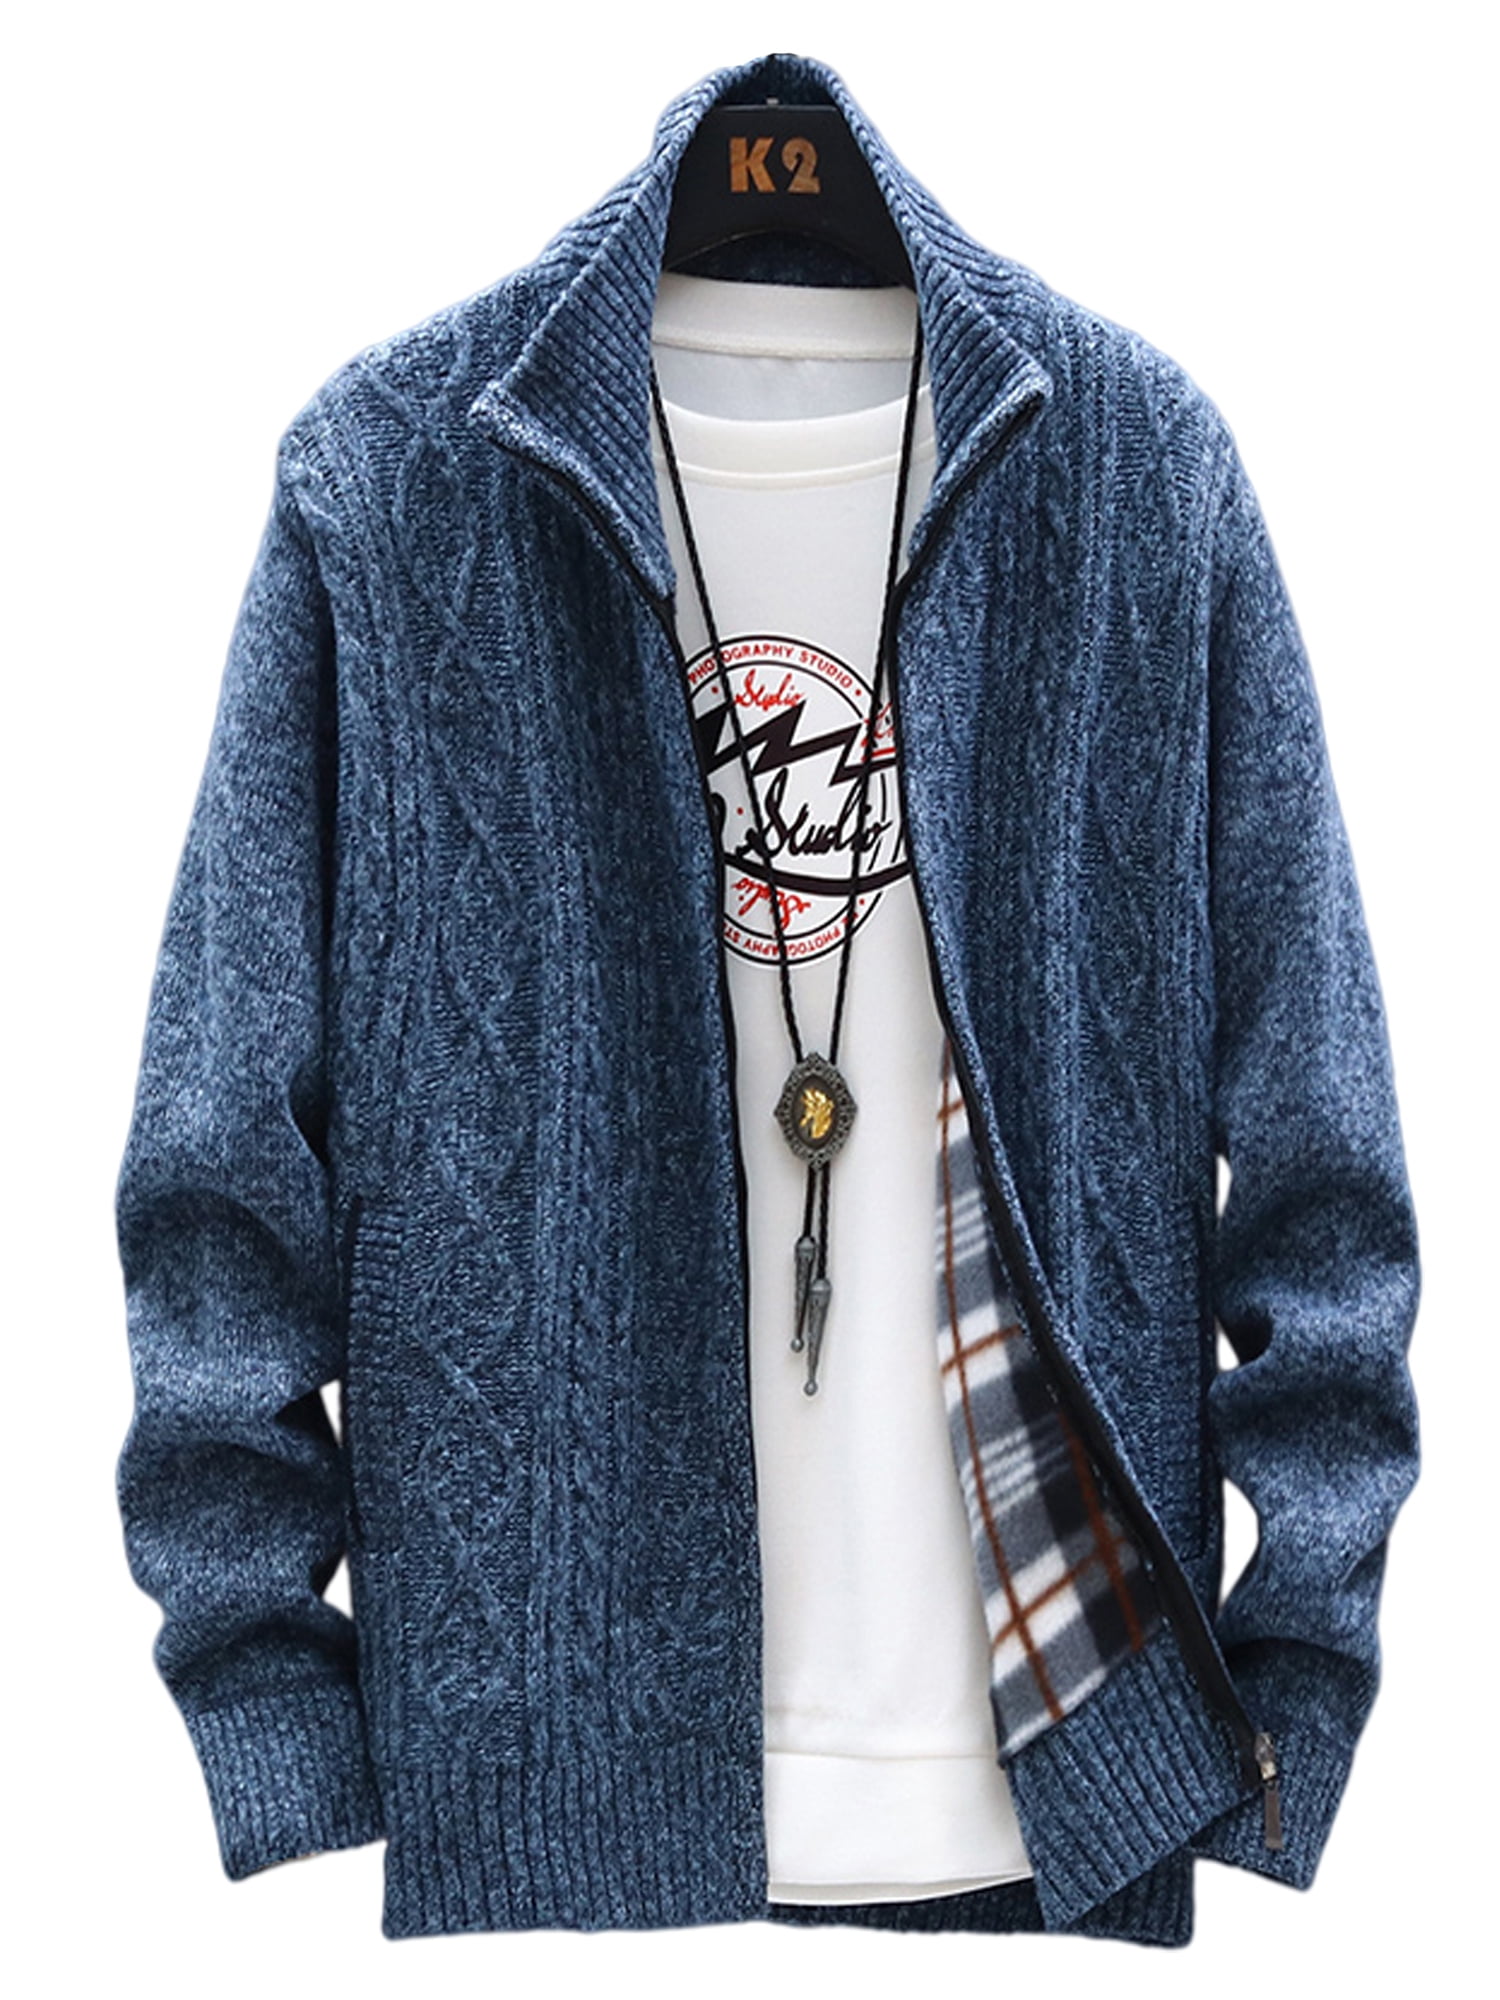 Avamo Thermal Full Zip Up Cardigan Collar Sweaters Knitwear for Men ...